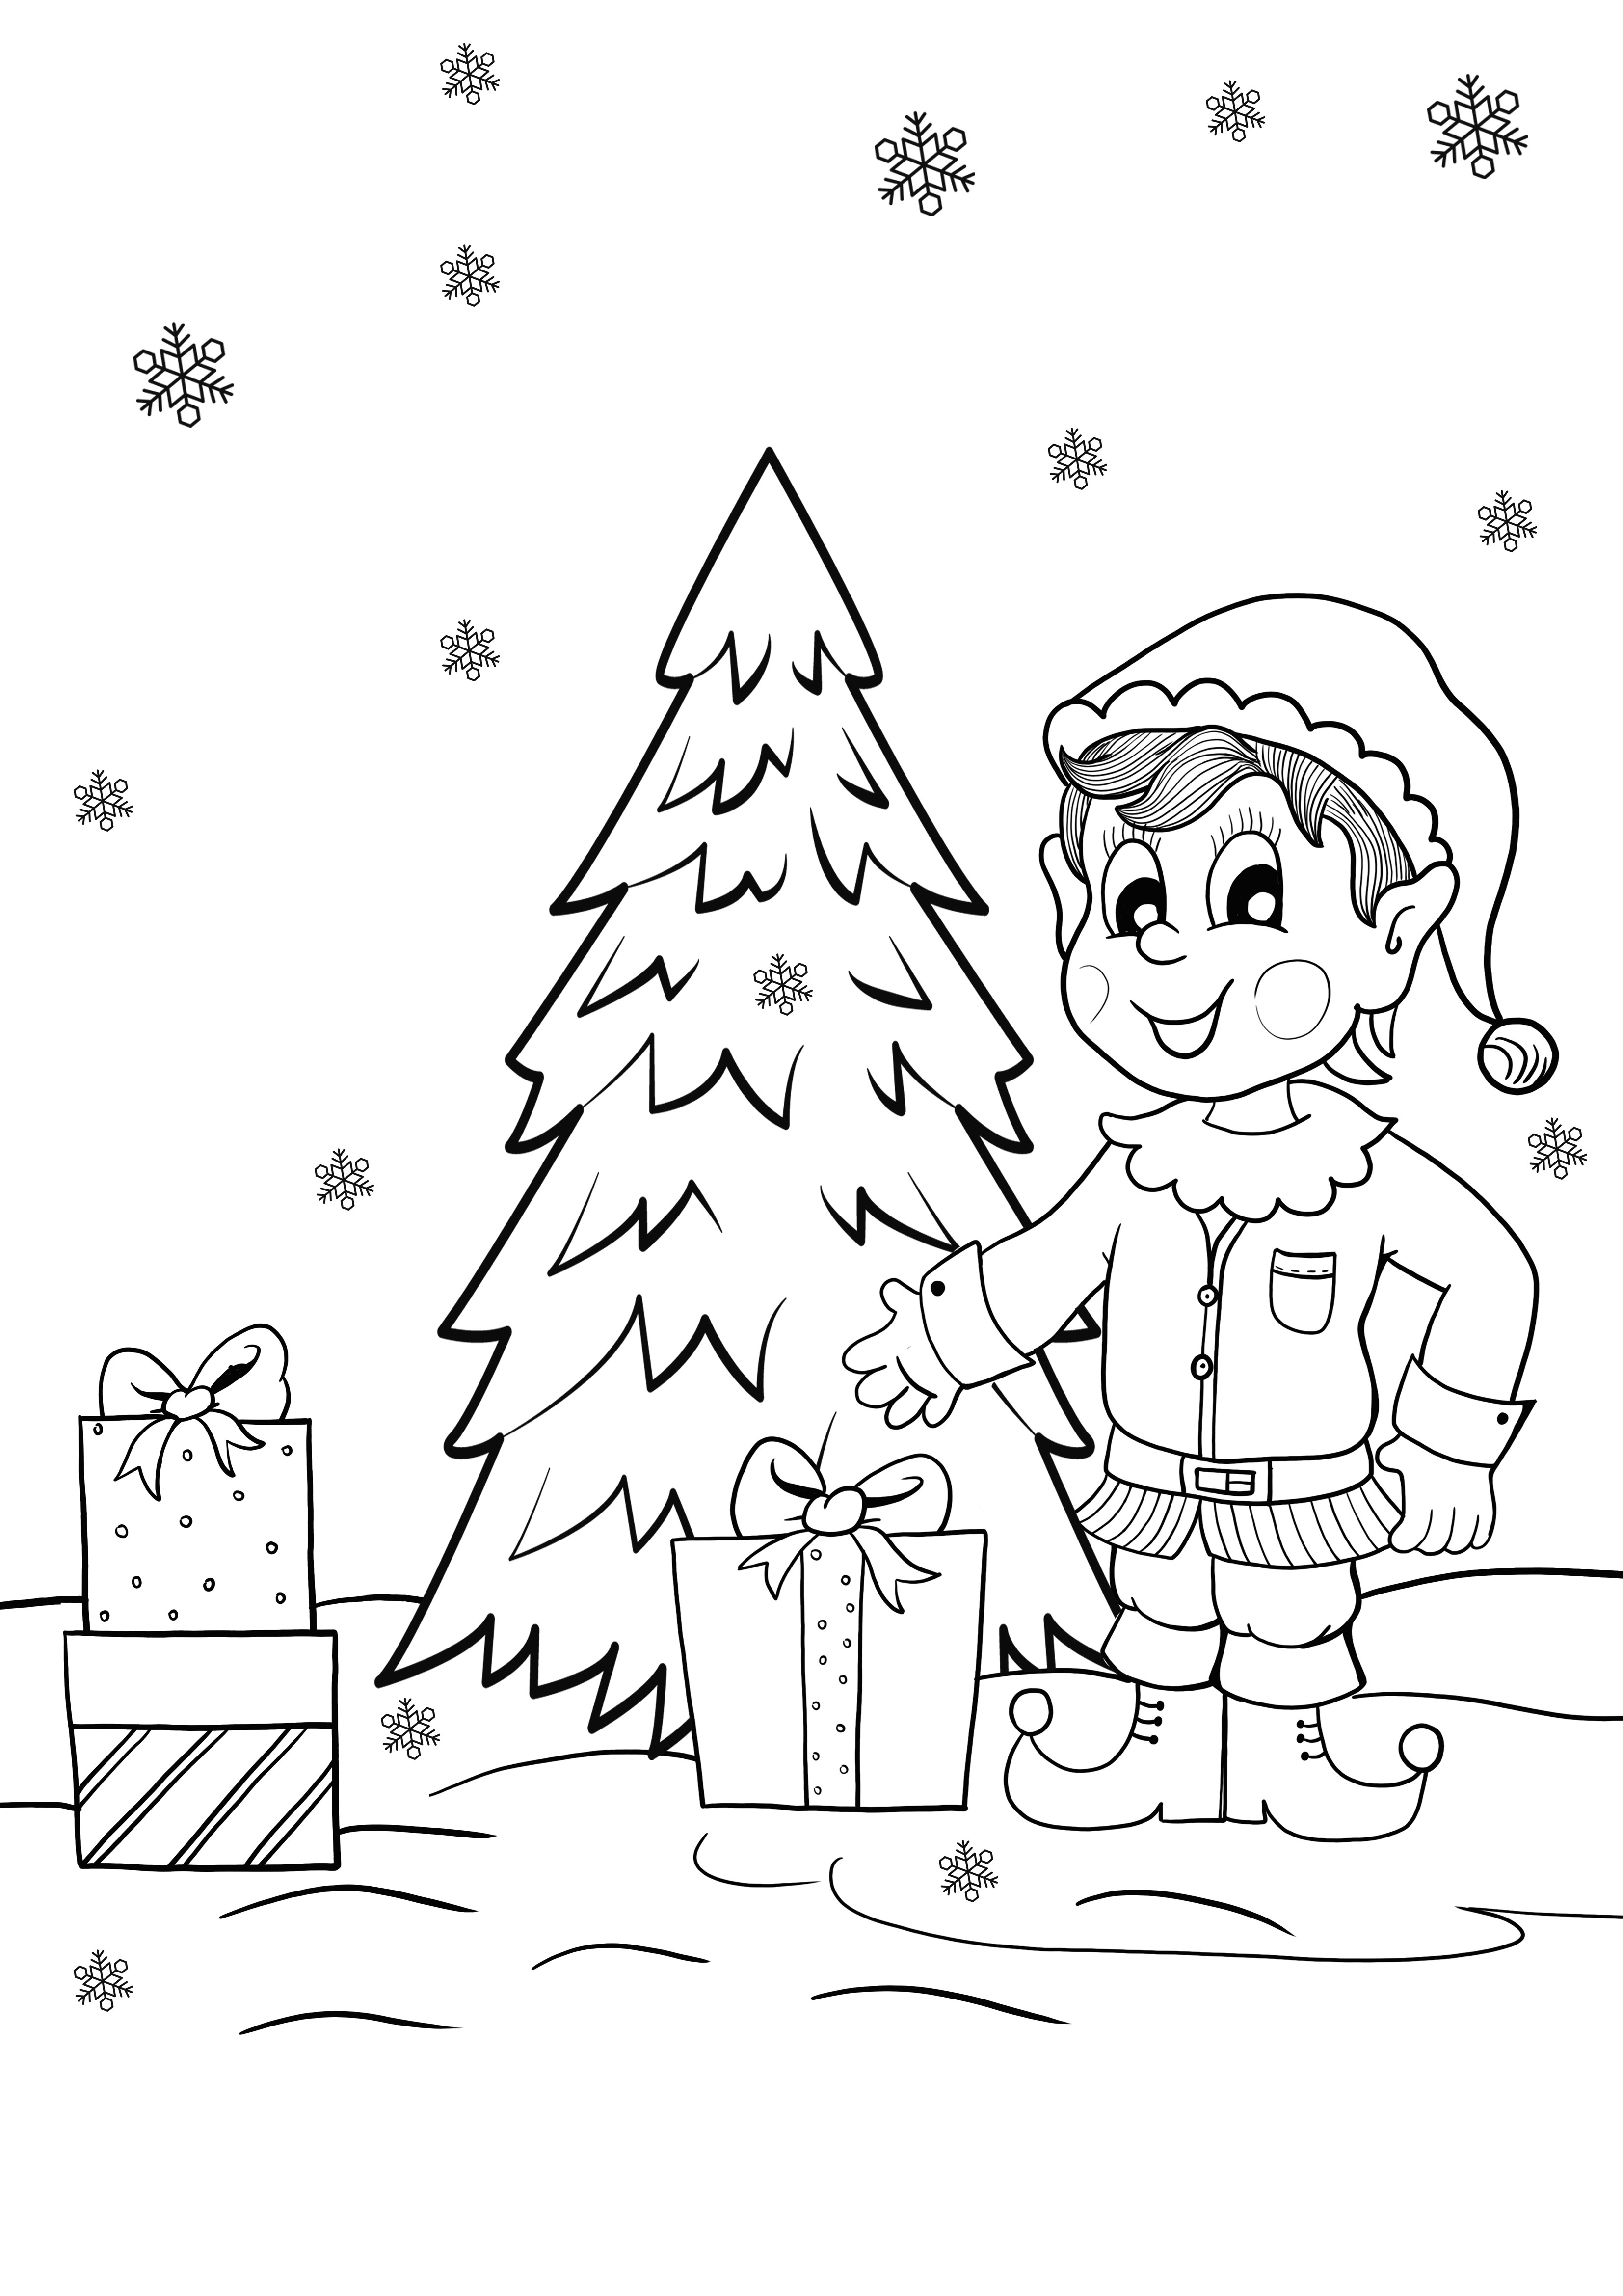 desenho de elfo e brindes de Natal para colorir